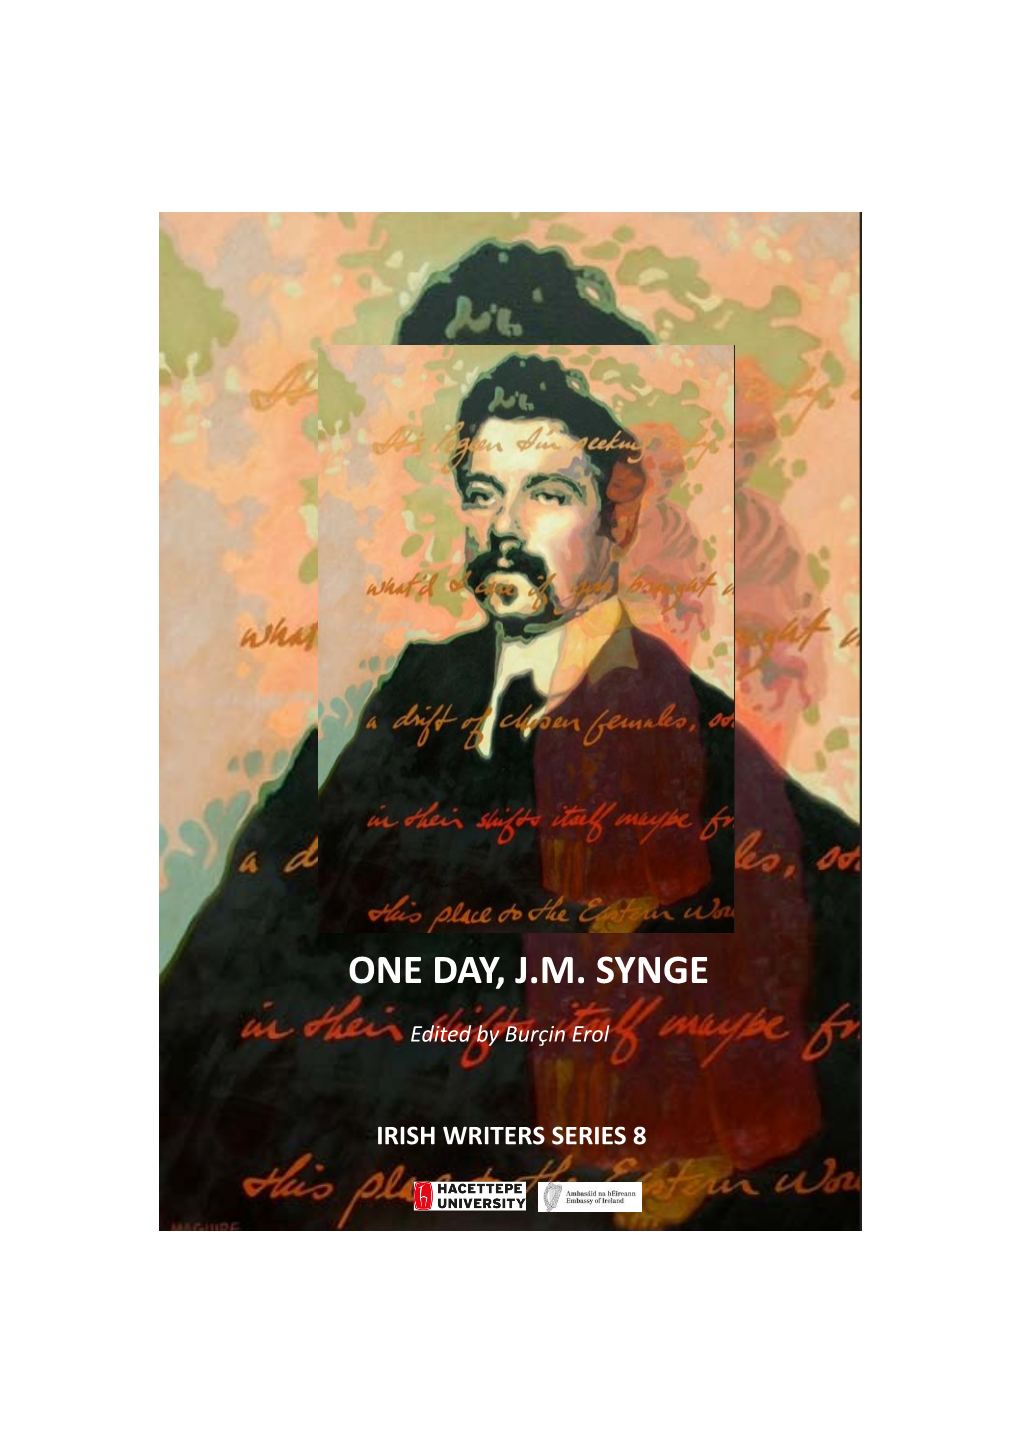 One Day, J.M. Synge